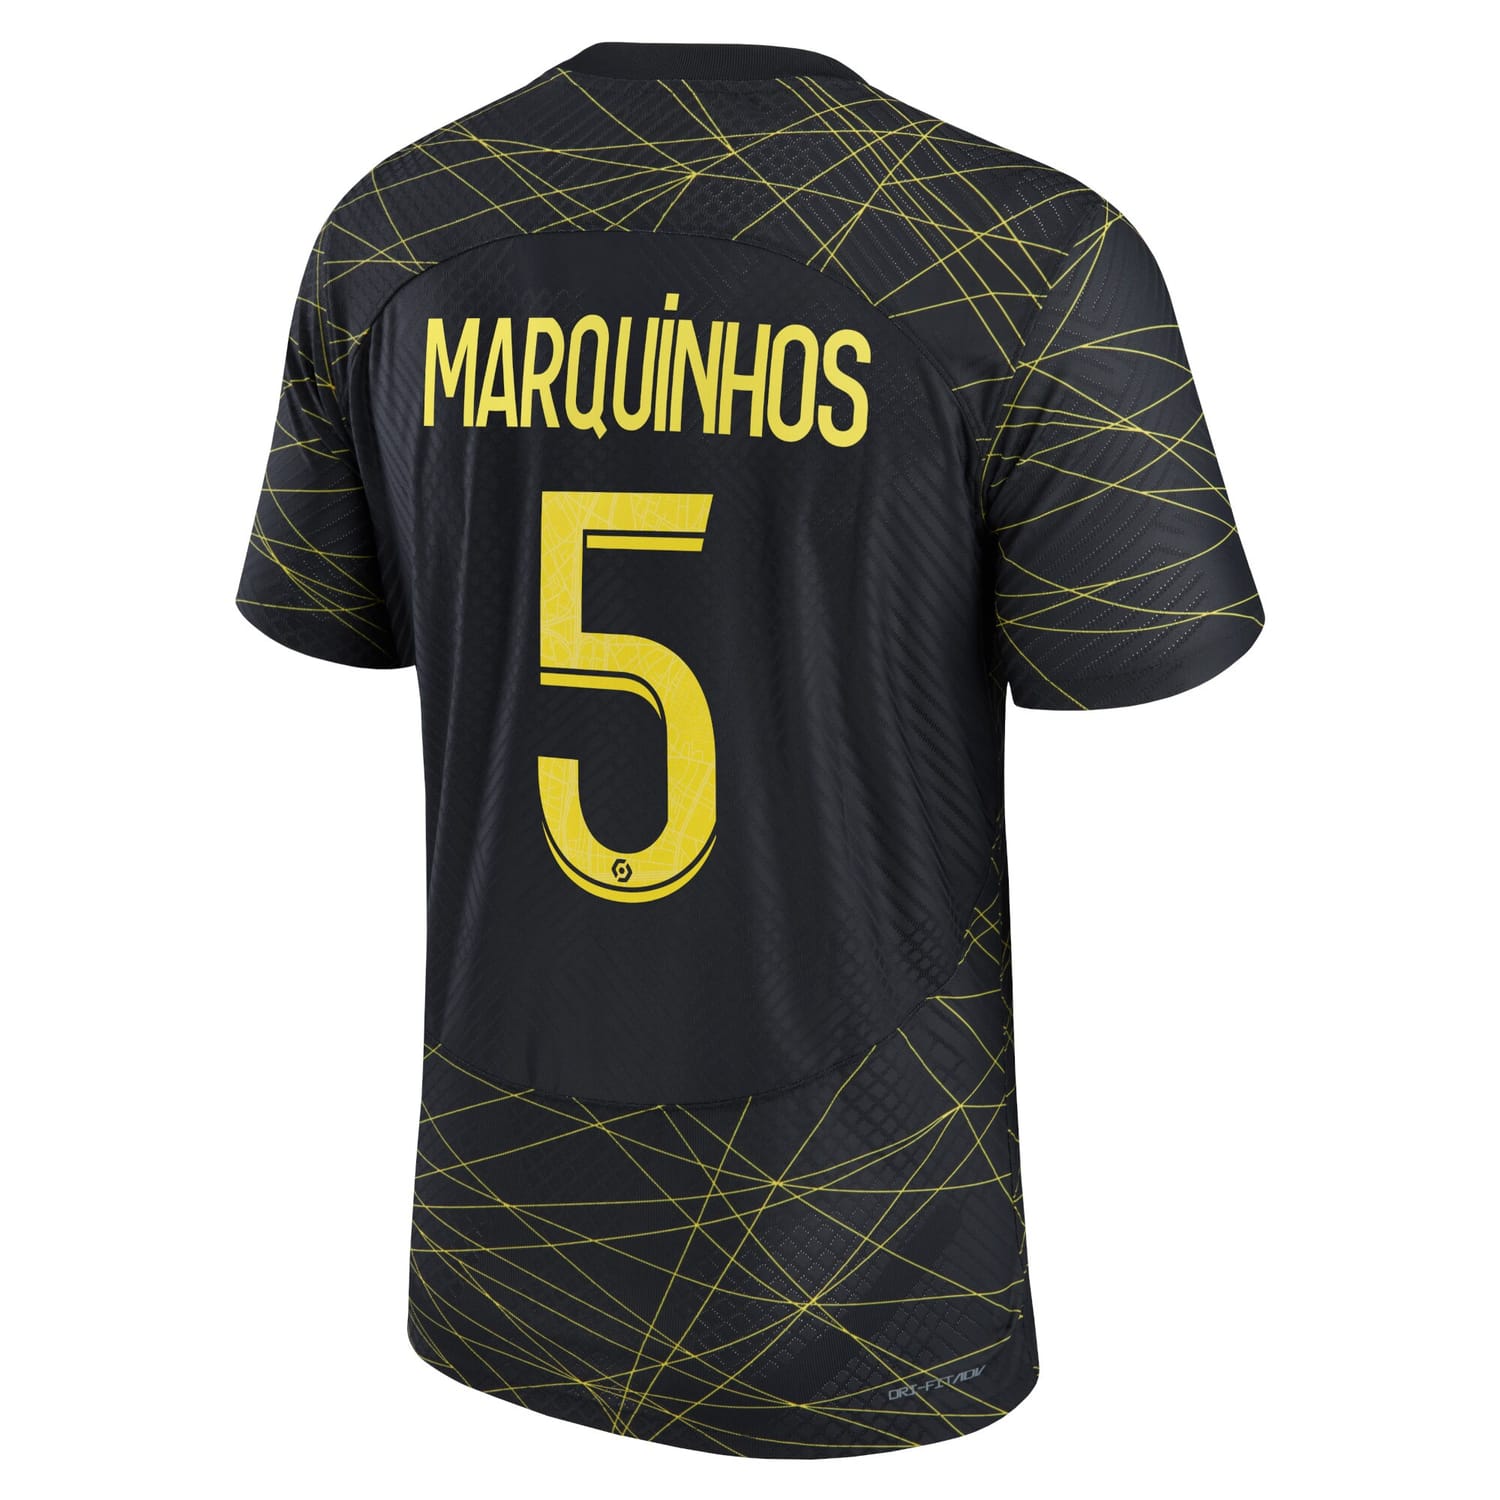 Ligue 1 Paris Saint-Germain Fourth Authentic Jersey Shirt 2022-23 player Marquinhos 5 printing for Men